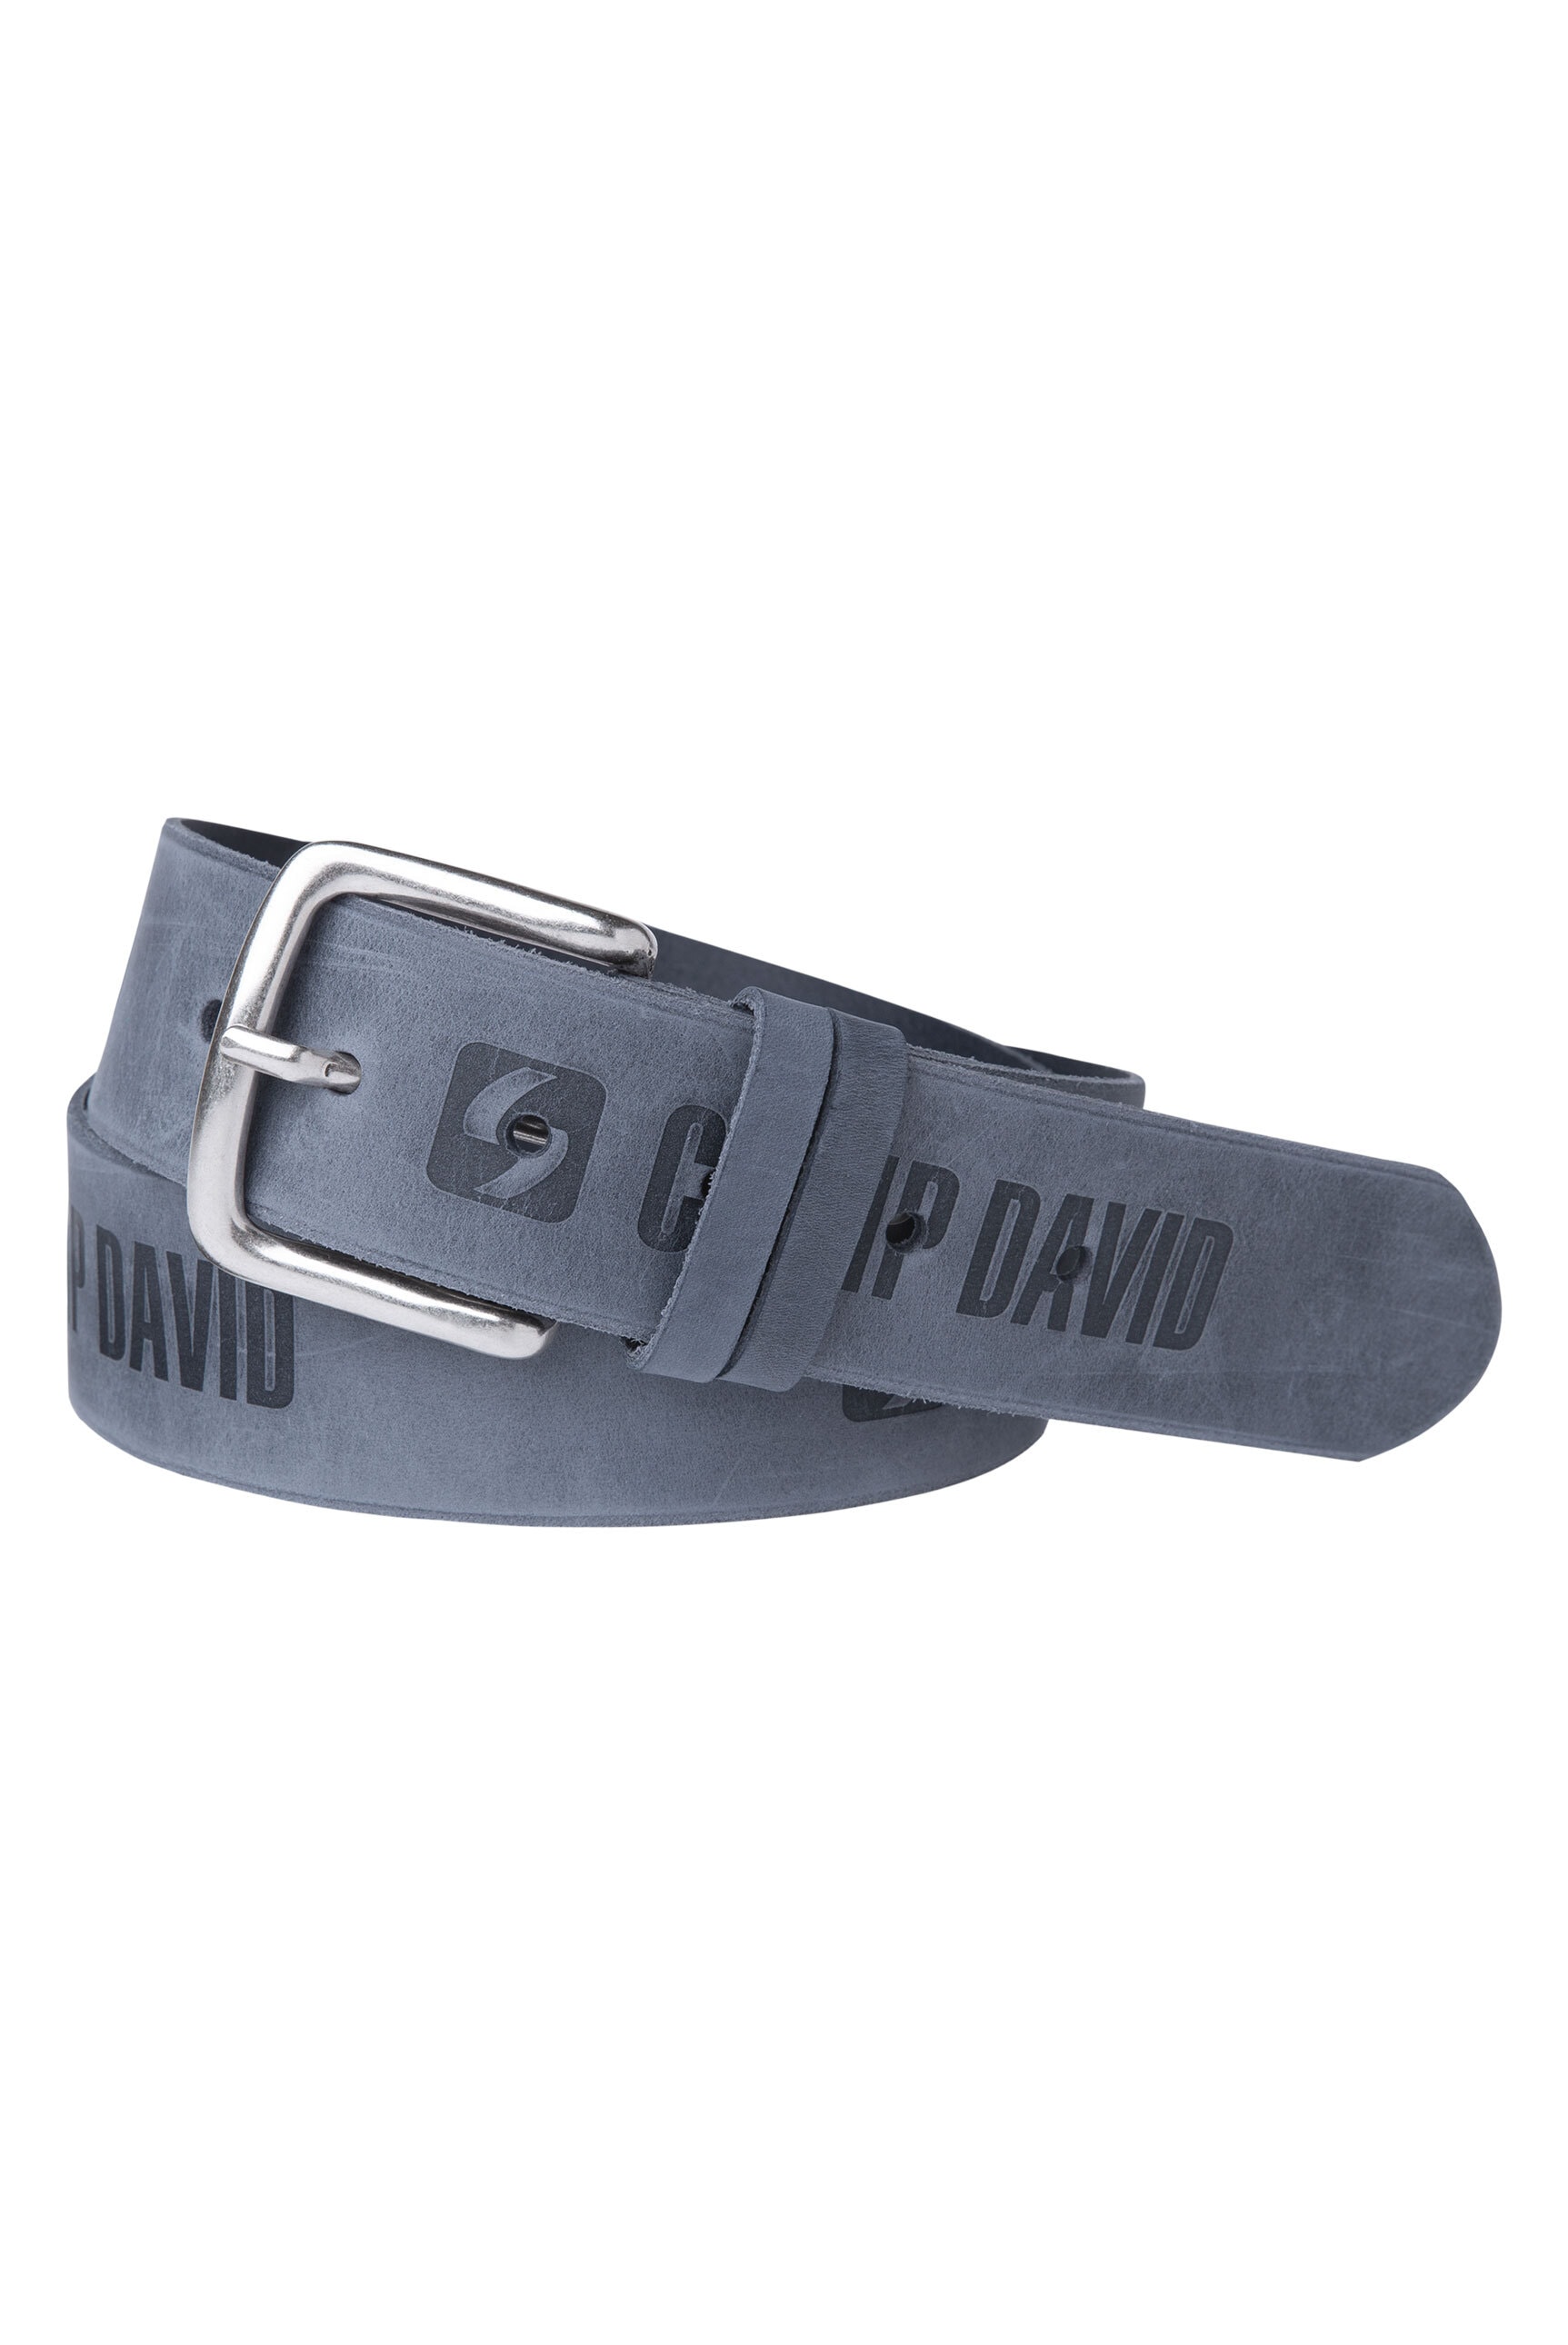 CAMP DAVID Ledergürtel, mit Used-Optik online bestellen | BAUR